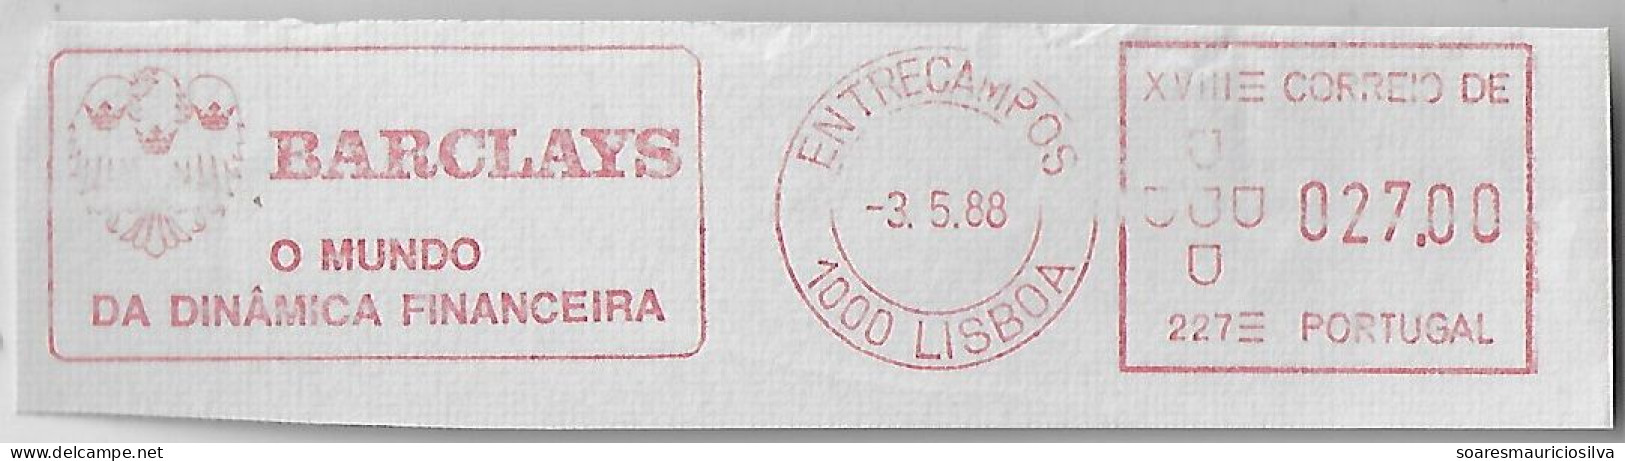 Portugal 1988 Fragment Meter Stamp Hasler Mailmaster Slogan Barclays The World Of Financial Dynamics Lisbon Entrecampos - Cartas & Documentos